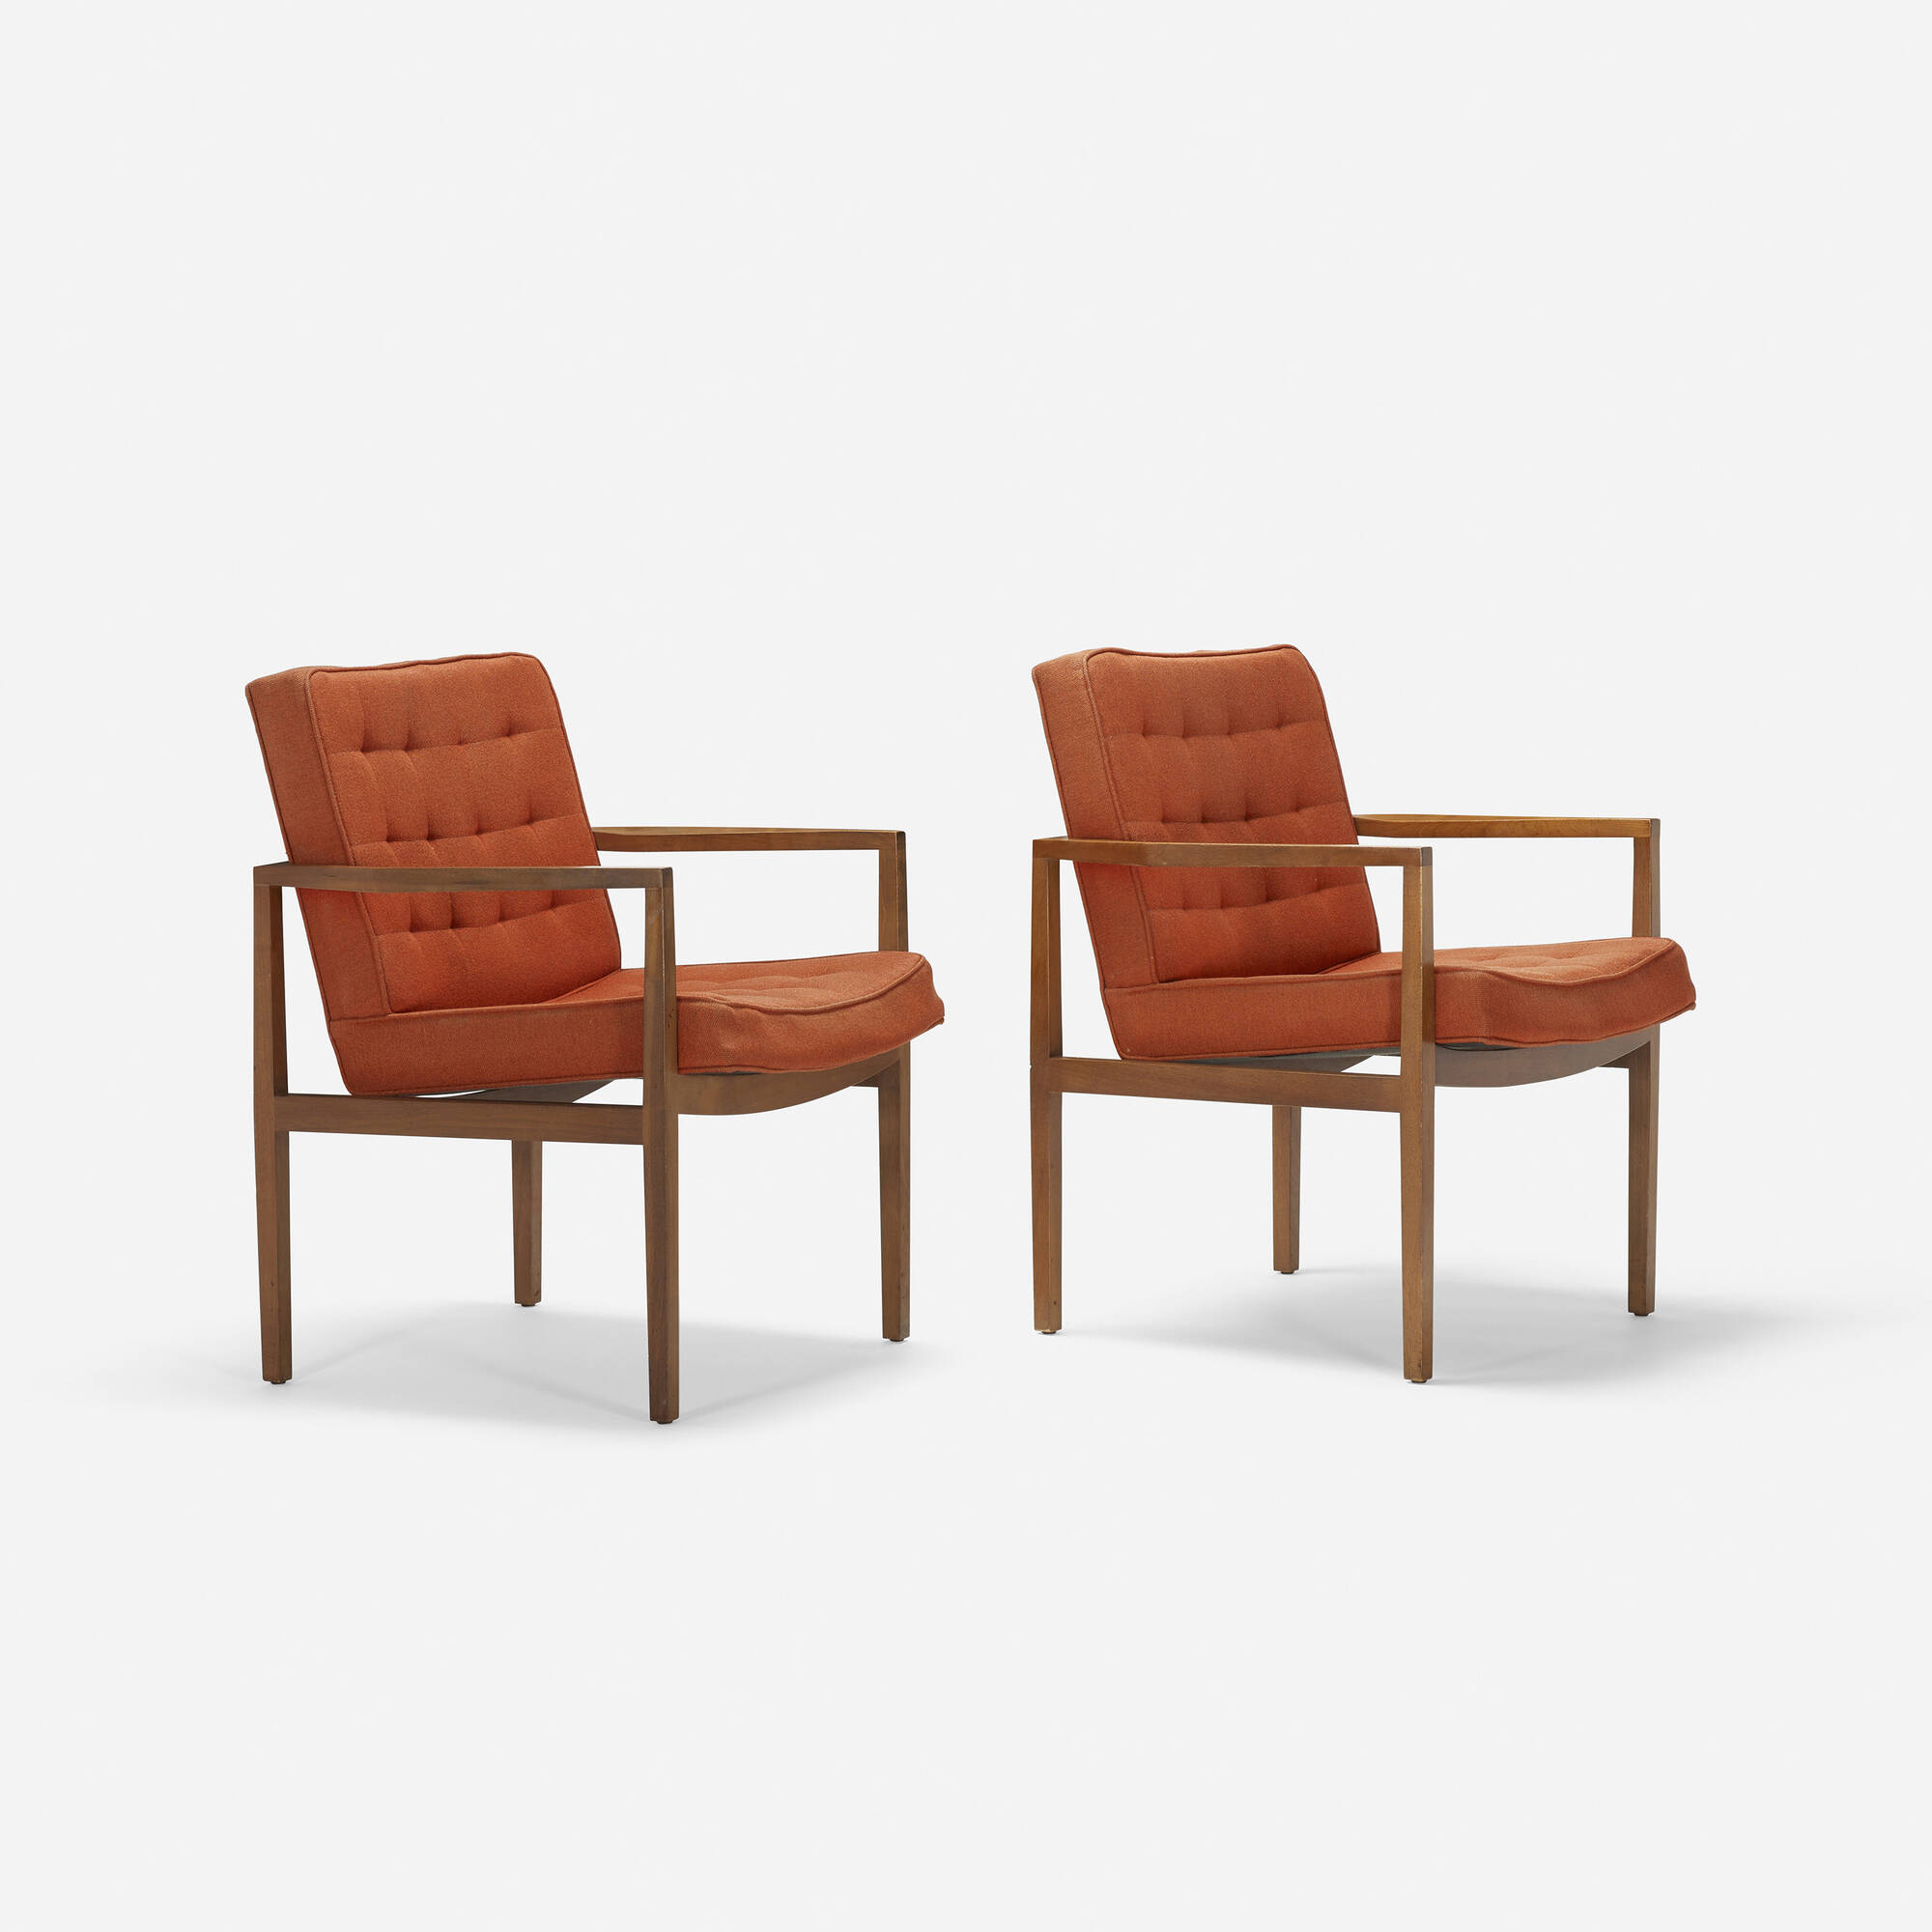 191: VINCENT CAFIERO, lounge chairs, pair